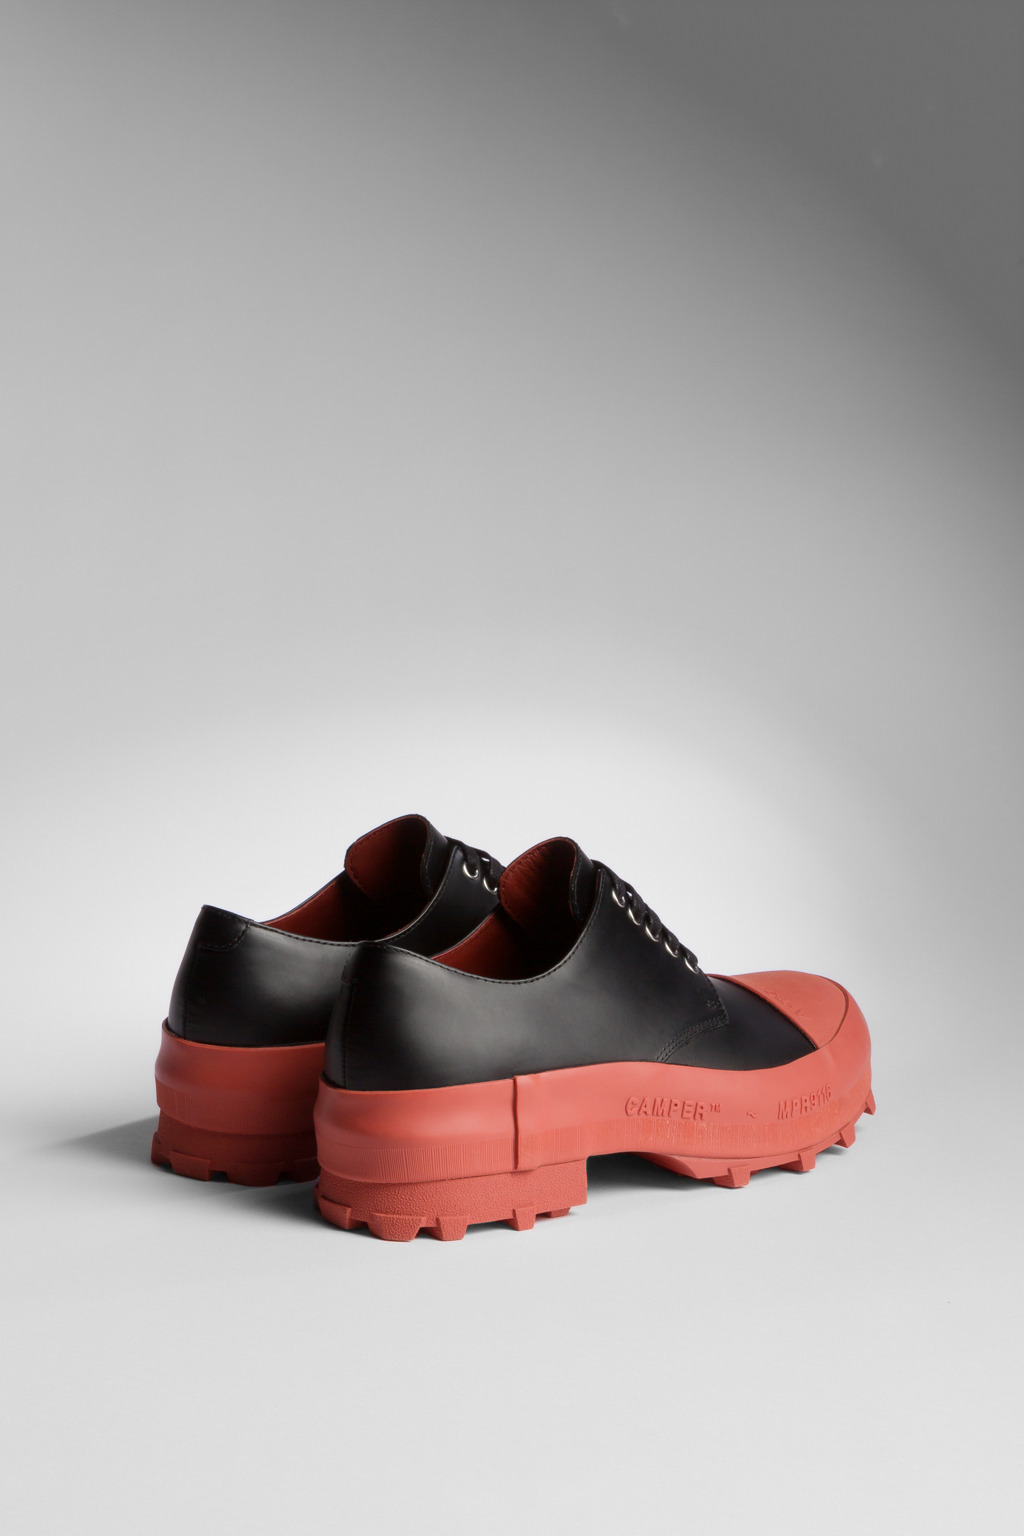 Tracktori Black Formal Shoes for Men - Spring/Summer collection 